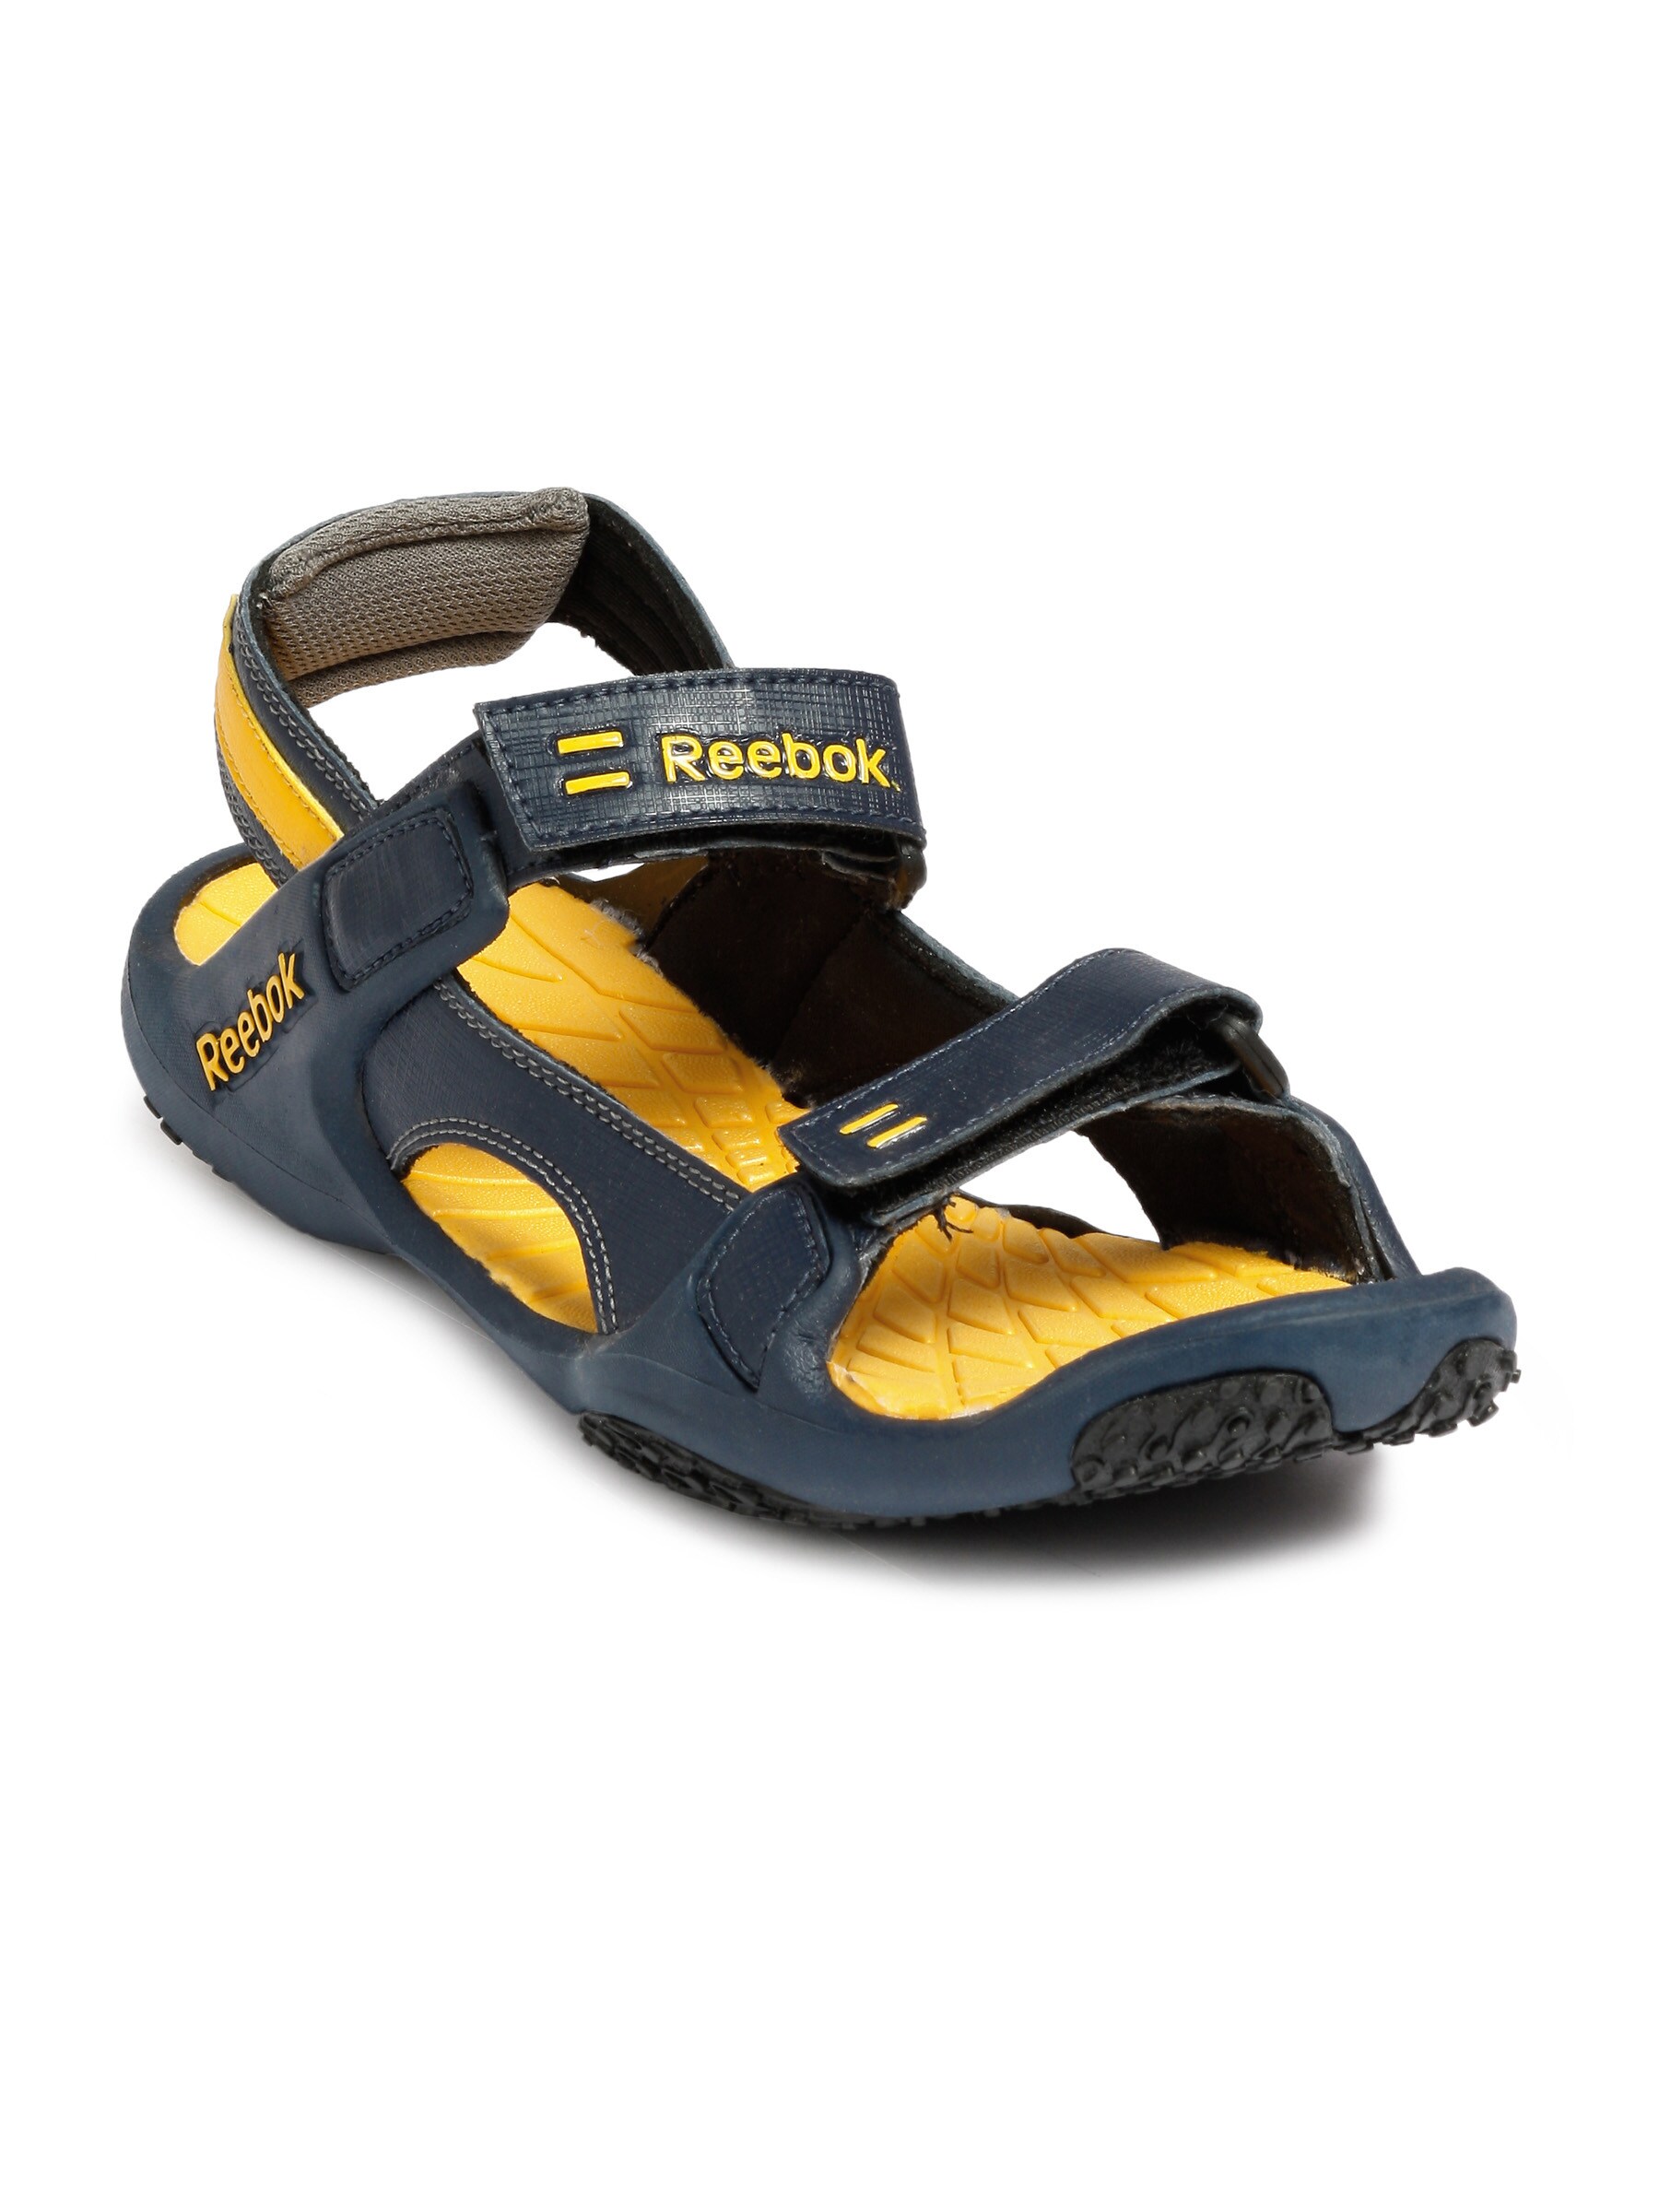 Reebok Men Windstar Yellow Sandals